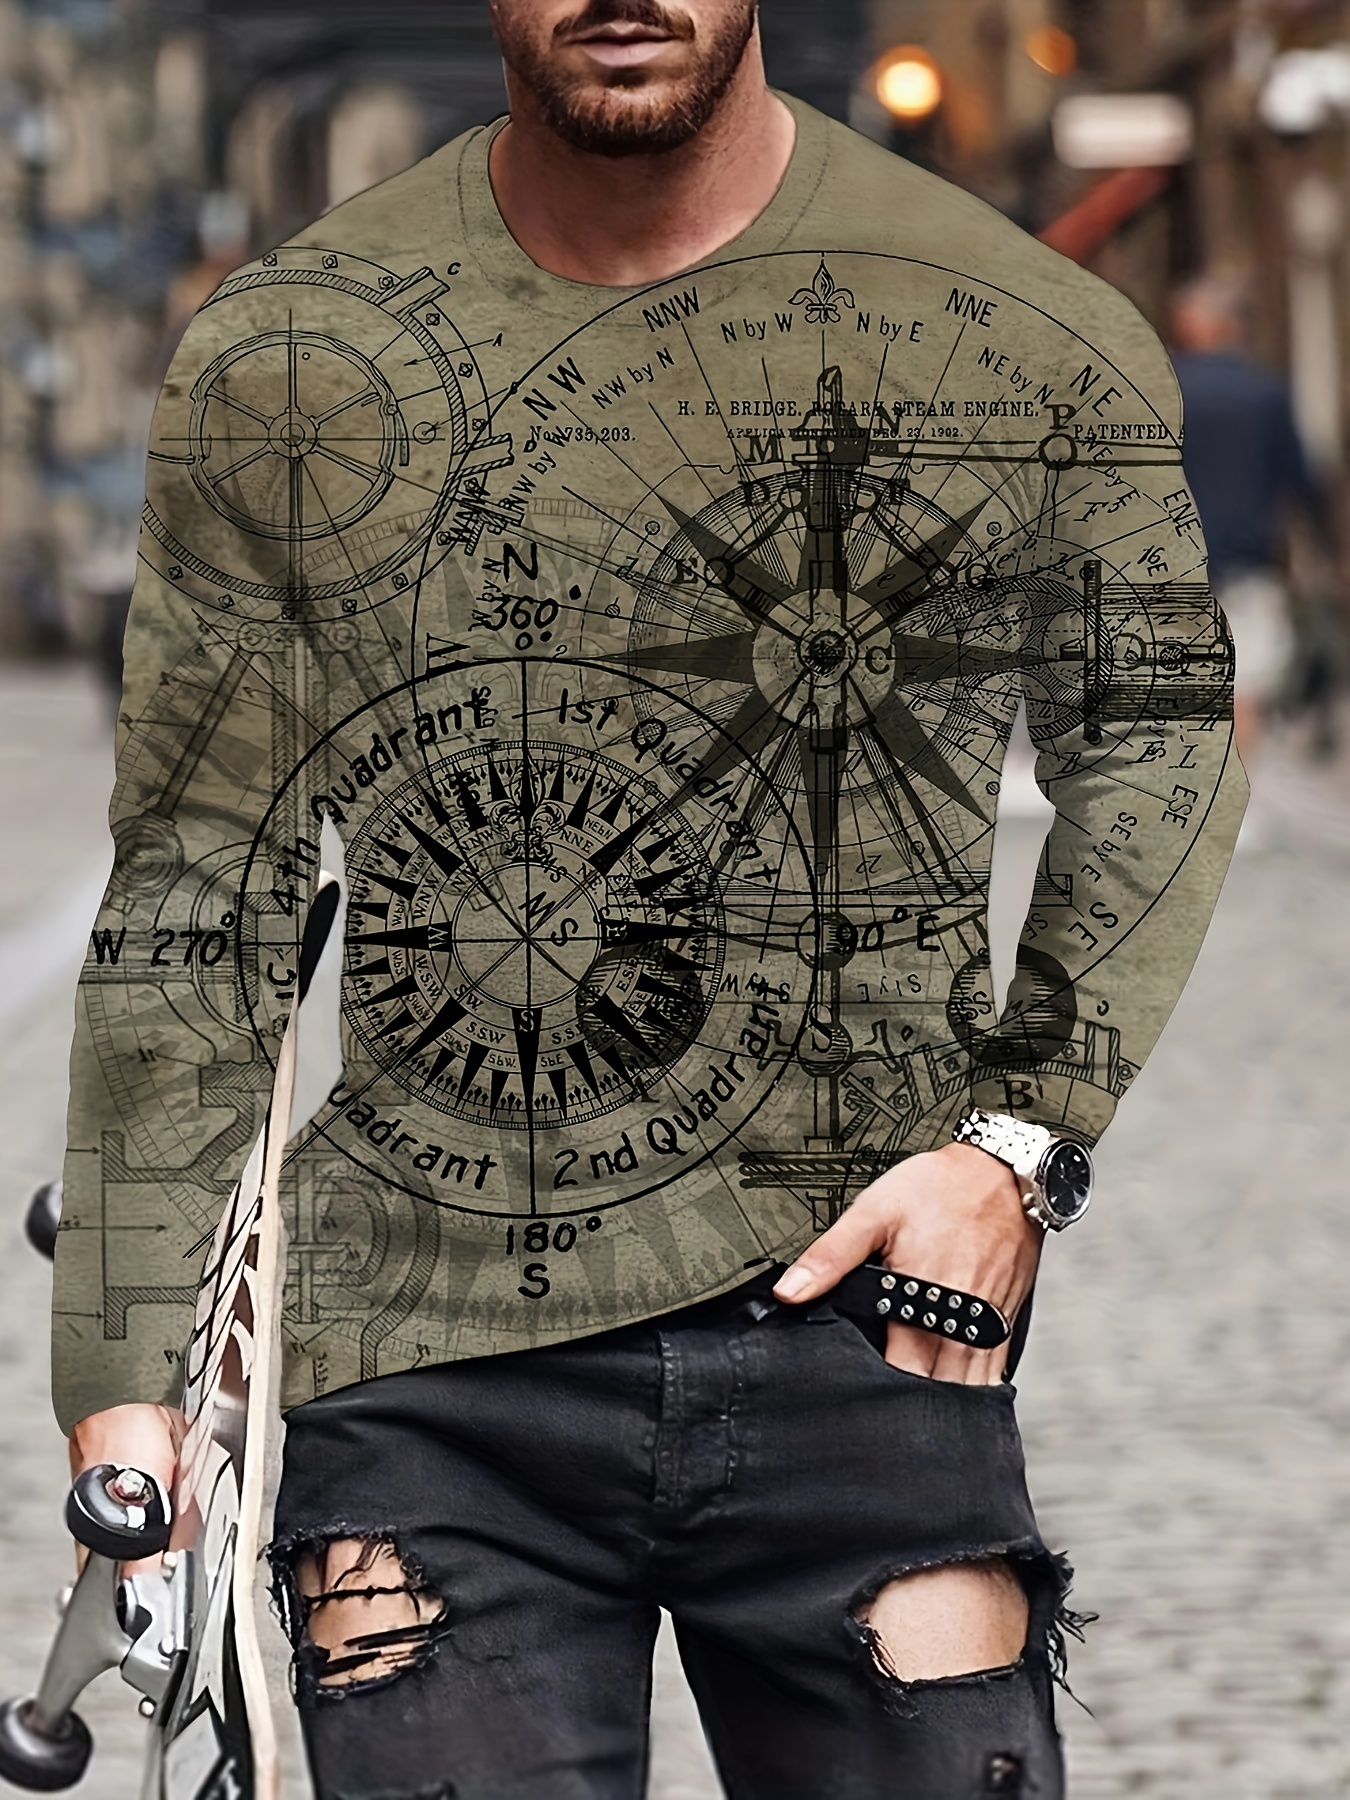 Street Pirate T-Shirt - Mens Clothing - Shirts & Tees